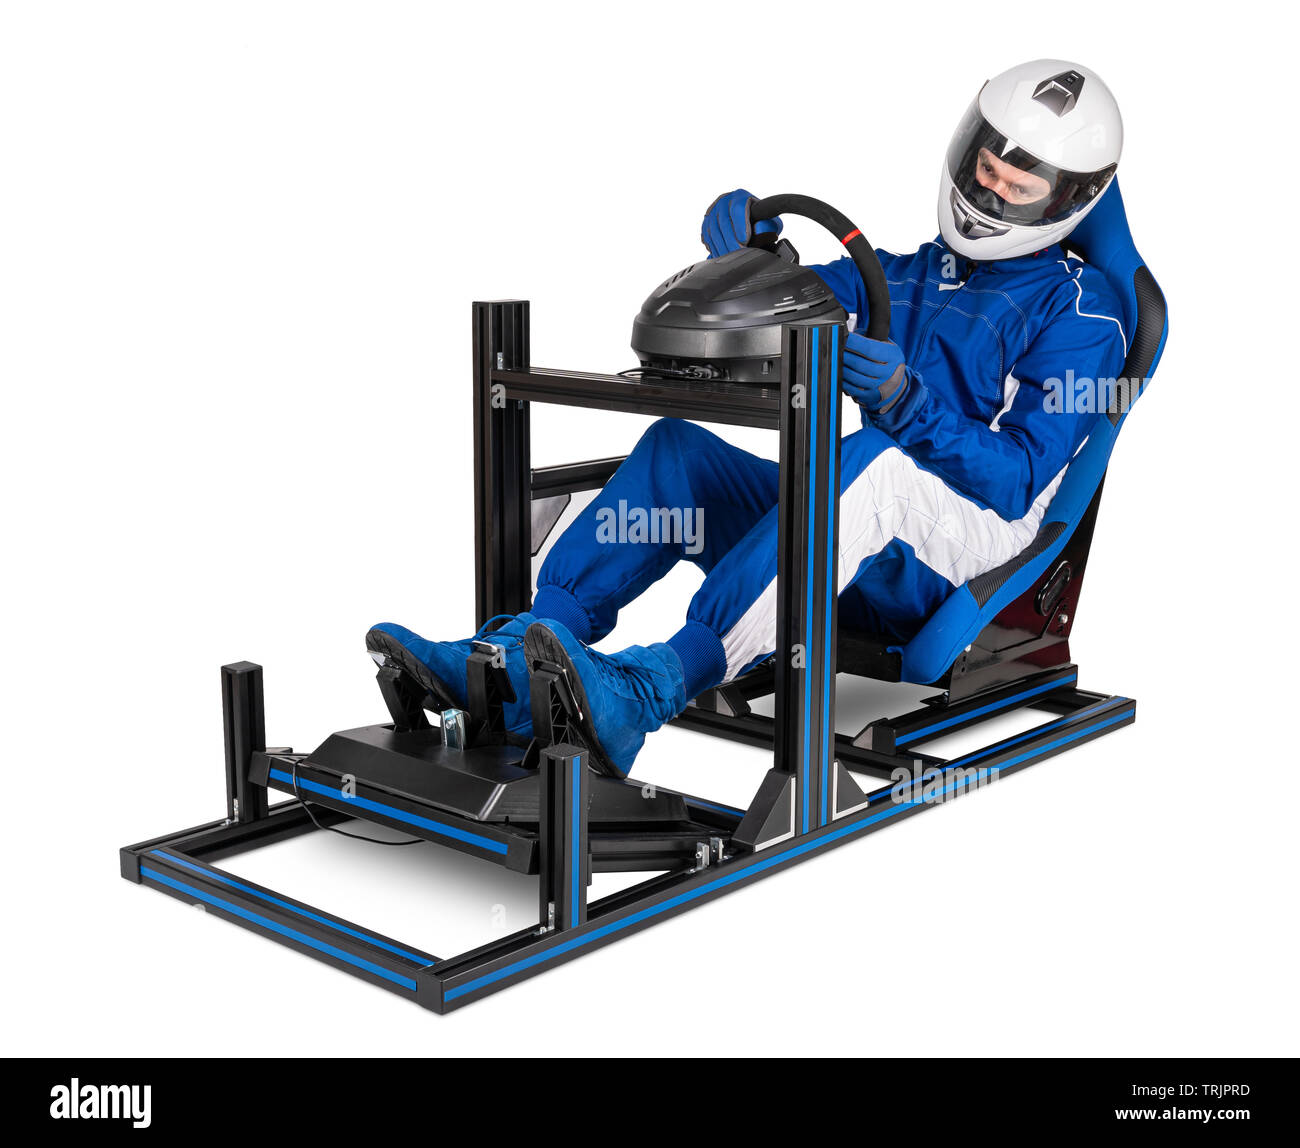 Race Driver in Blau insgesamt mit Helm Training am Simulator simracing Aluminium Rigg für video spiel racing. Motorsport auto Schalensitz Lenkrad Stockfoto